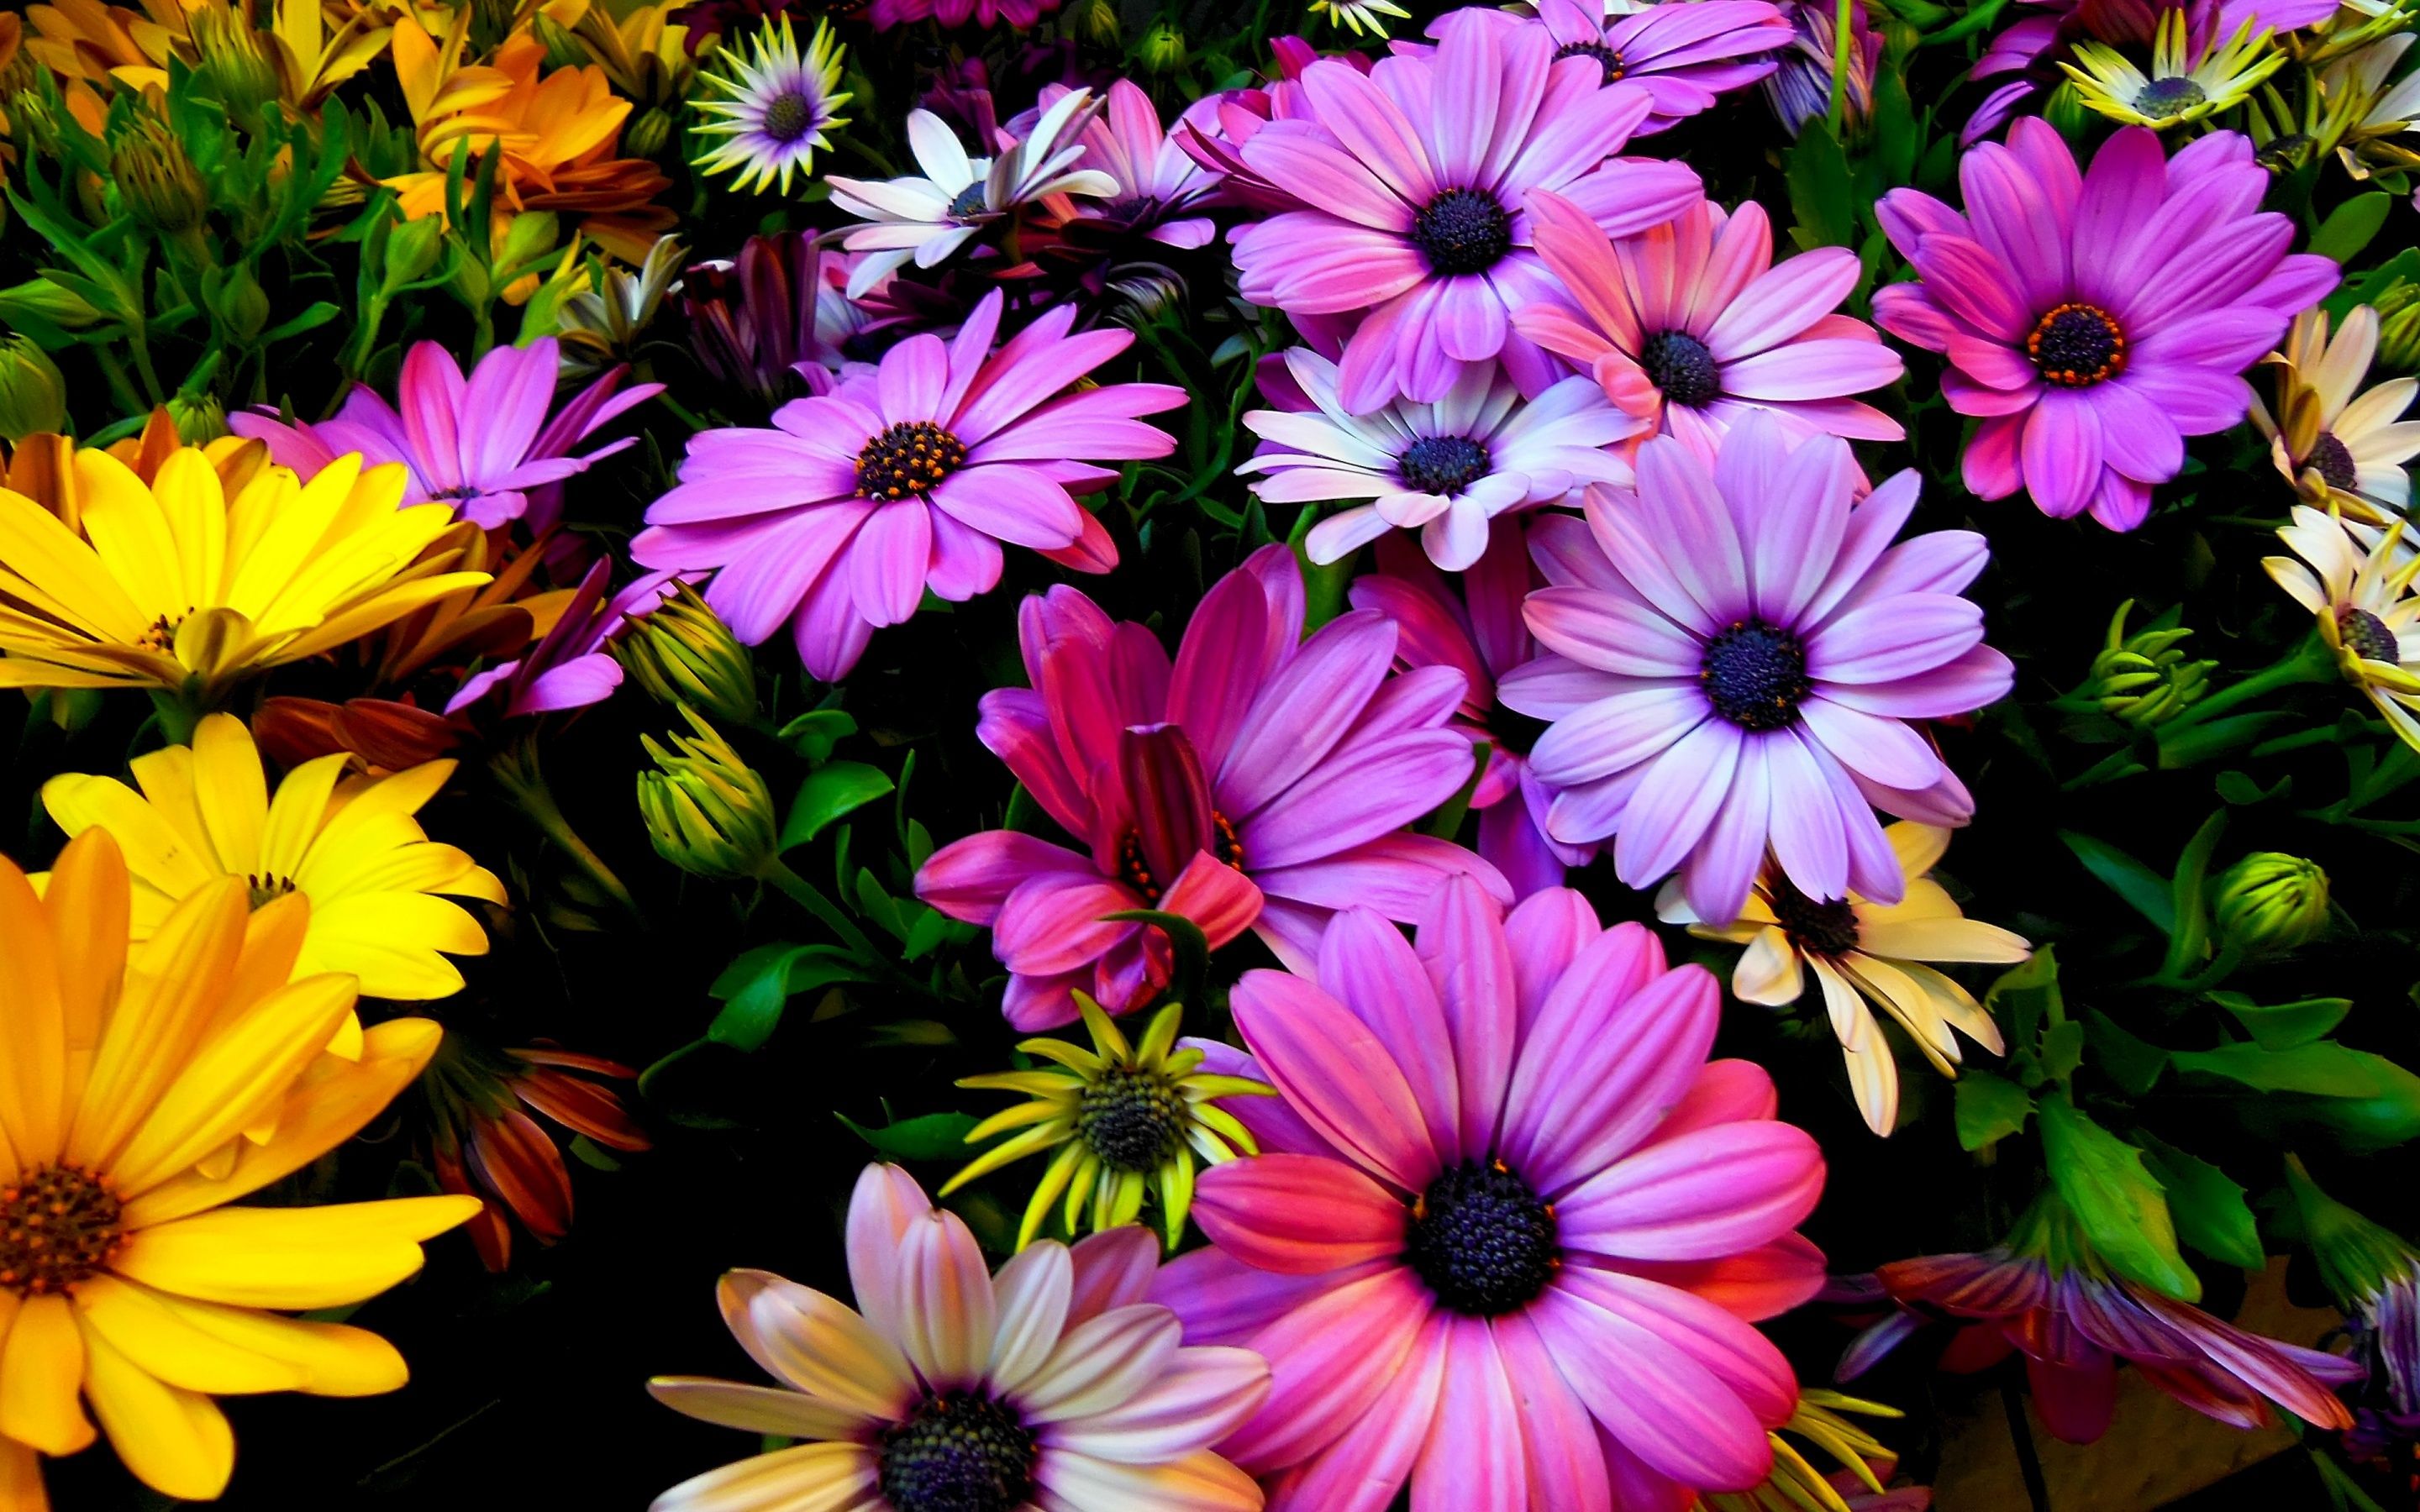 Purple Yellow Daisy Flowers Wallpaper in jpg format for free download